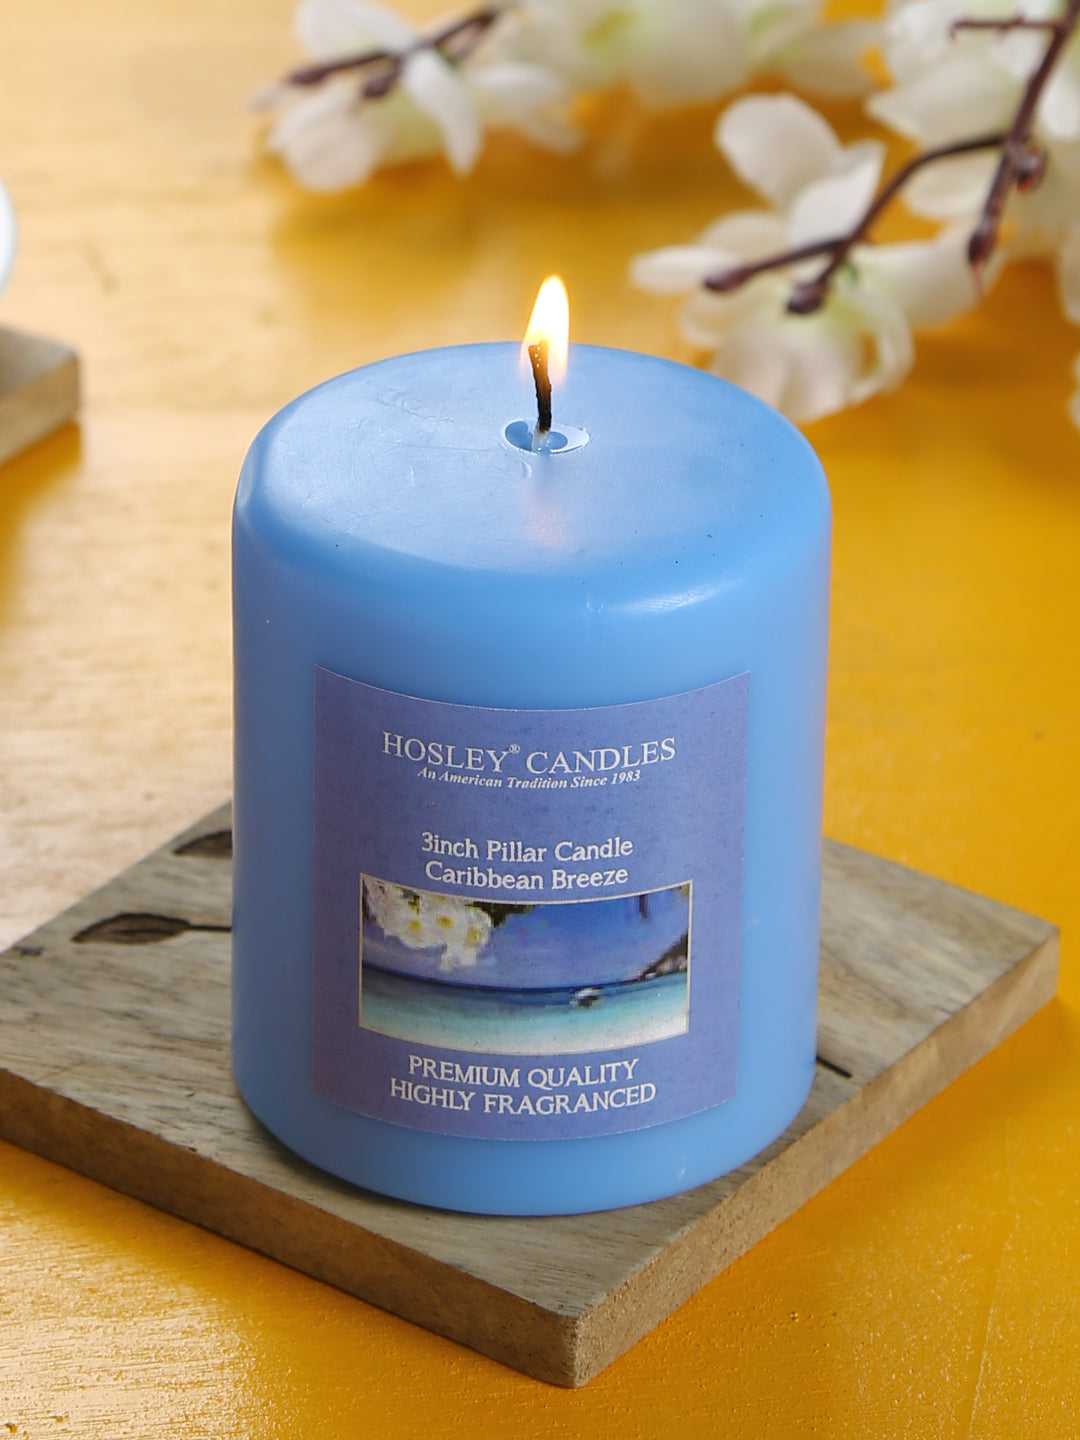 Hosley® Caribbean Breeze Highly Fragranced 3inch Pillar Candle